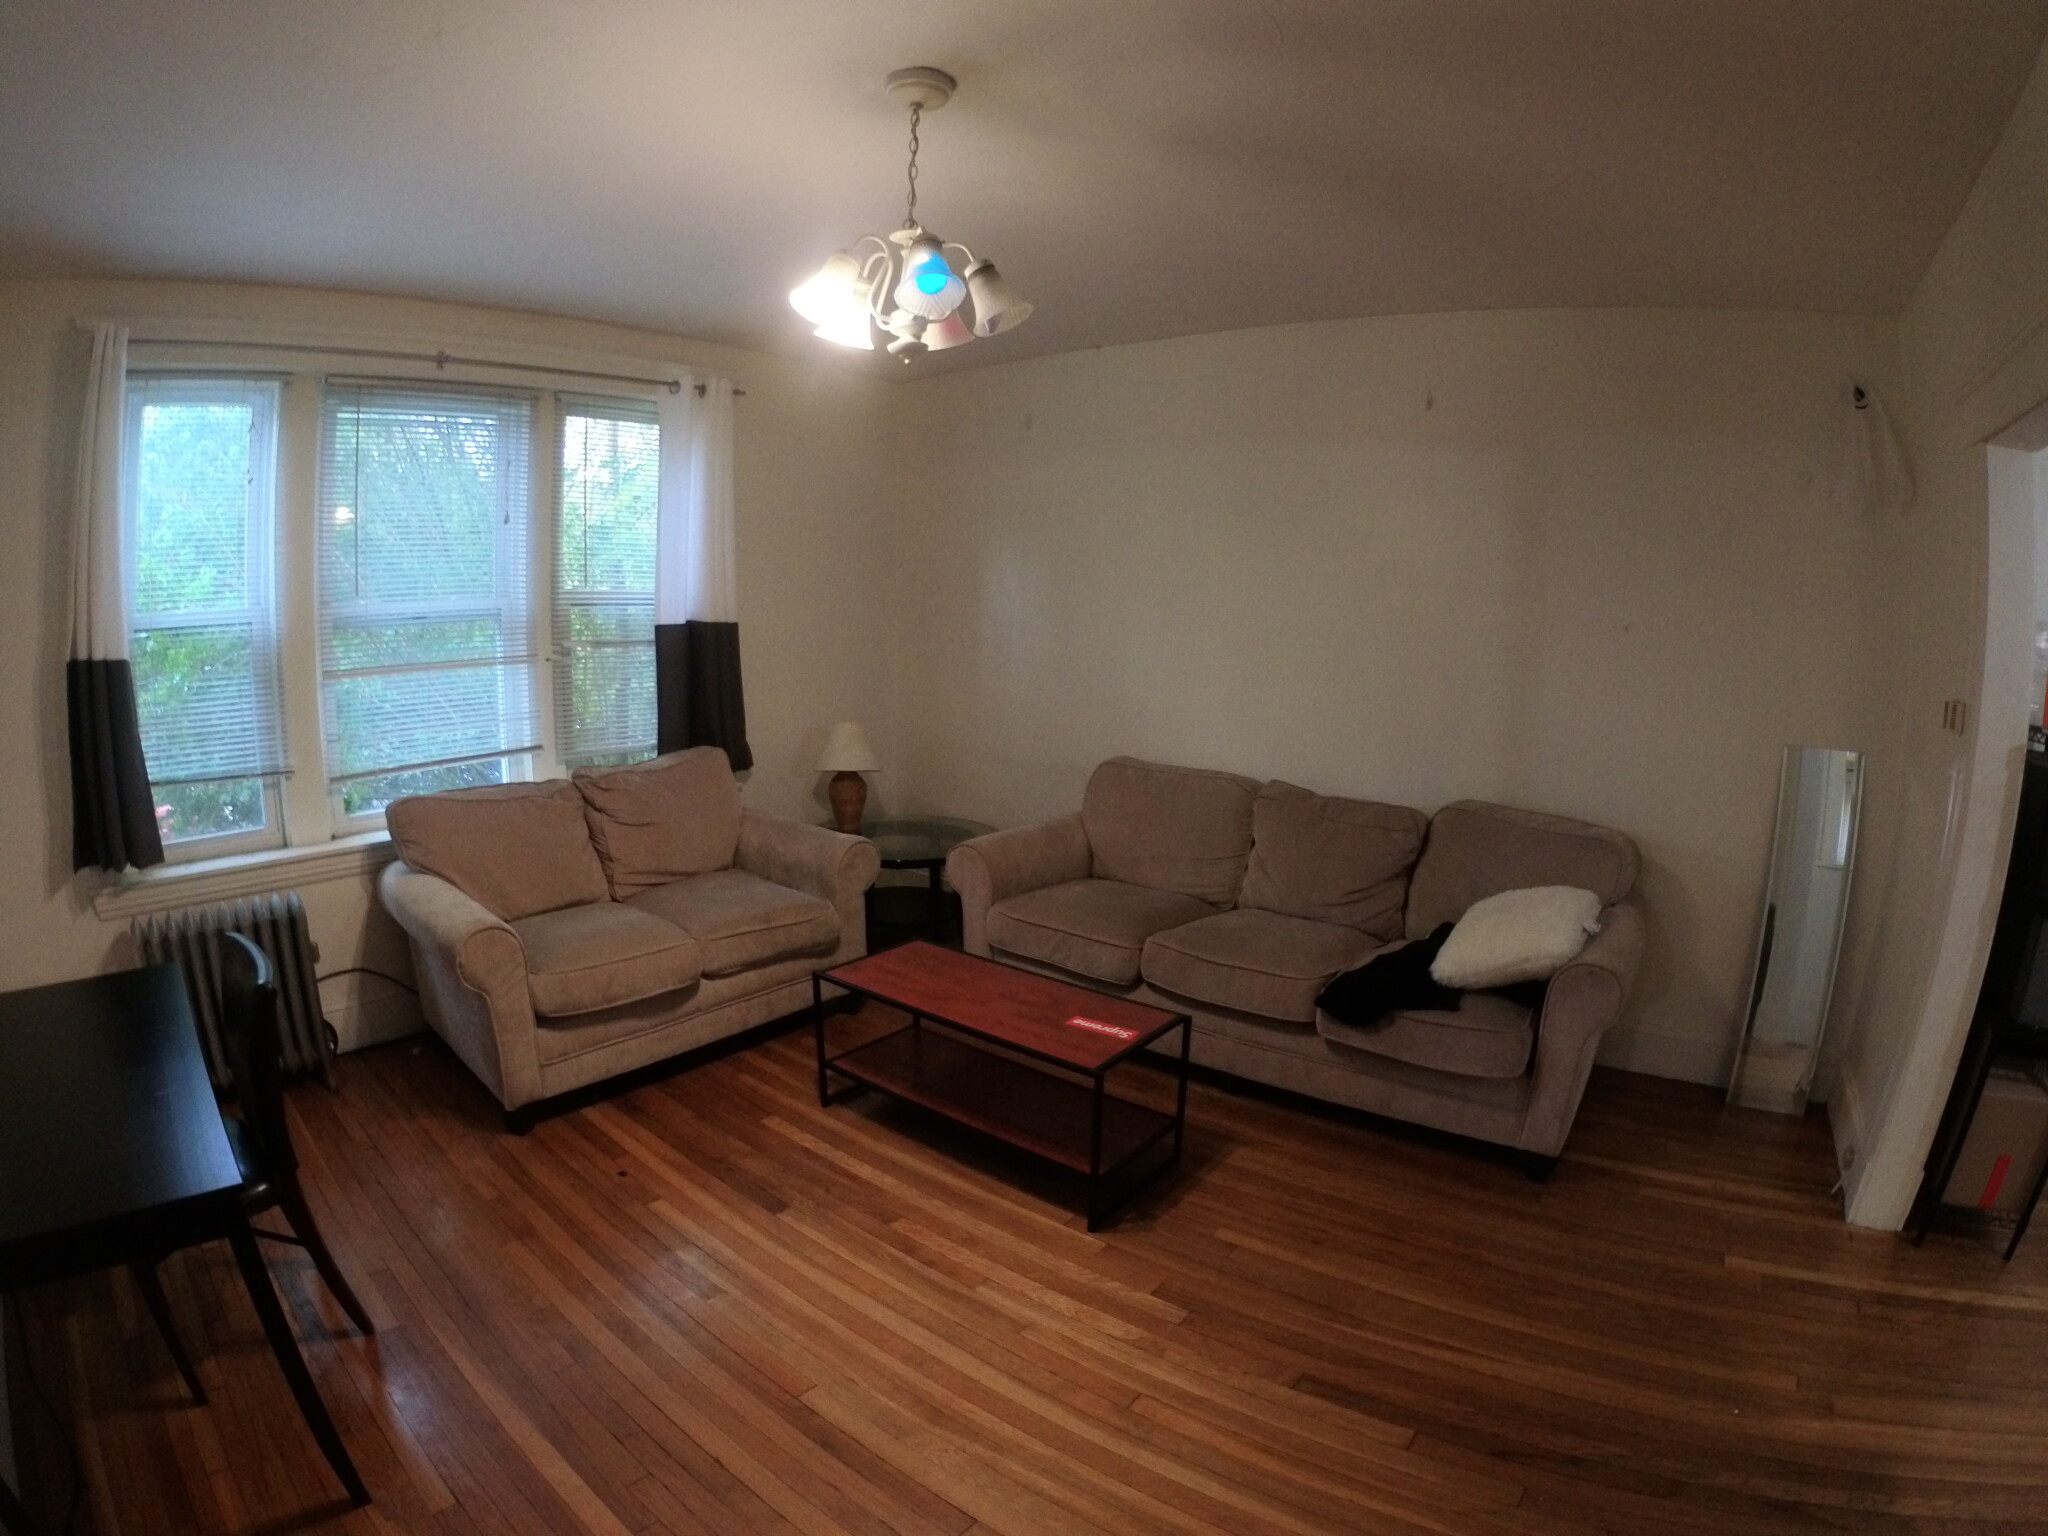 Photos of apartment on Verndale,Brookline MA 02446